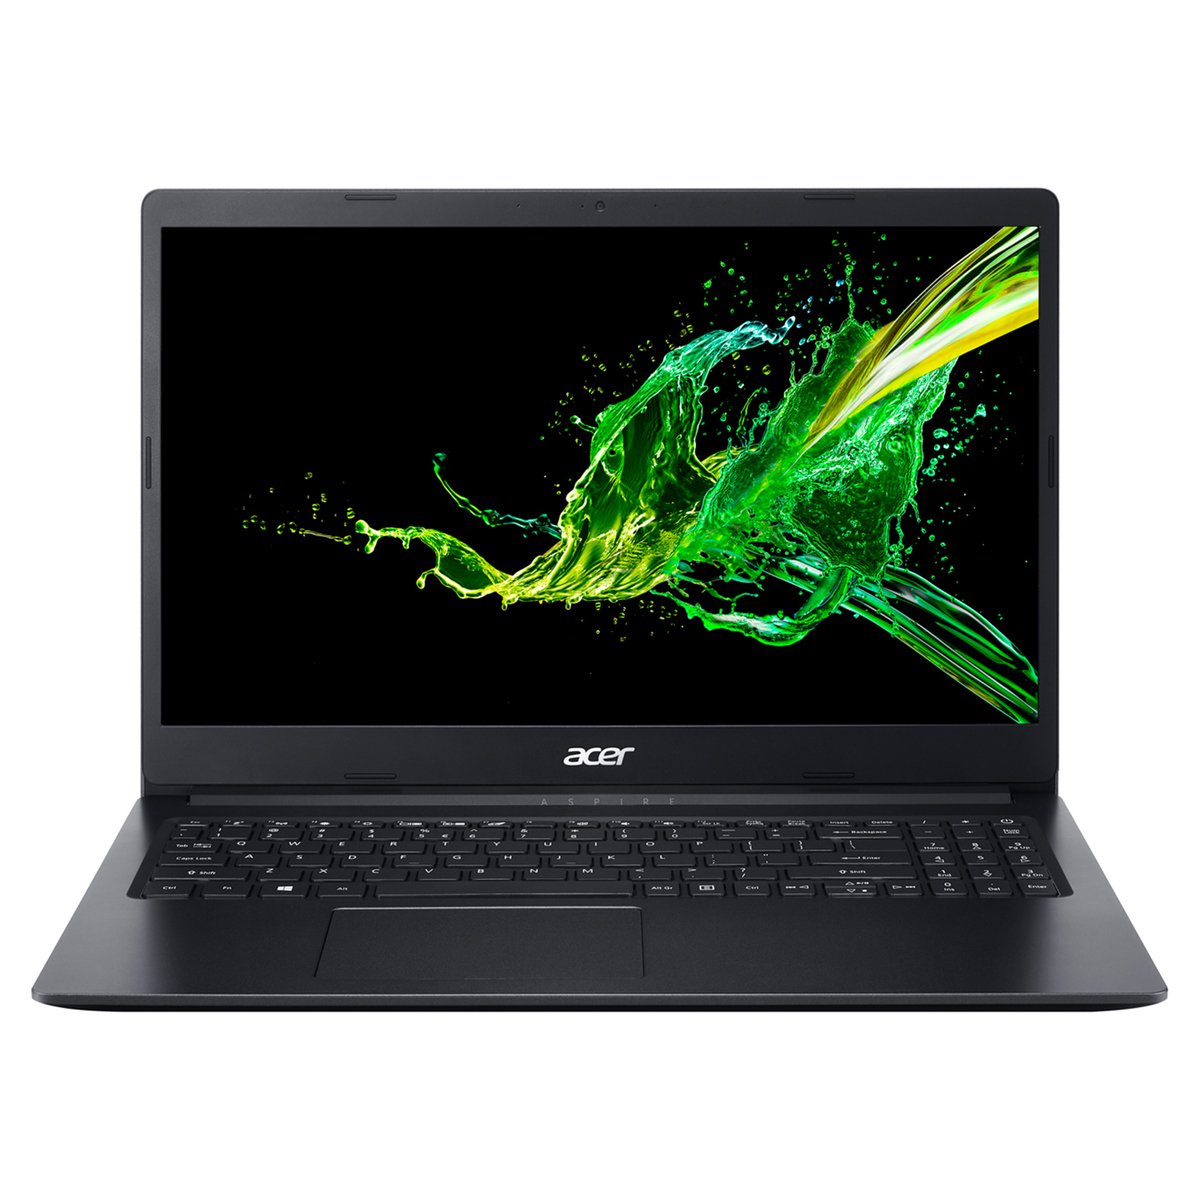 Acer Notebook A515 Black